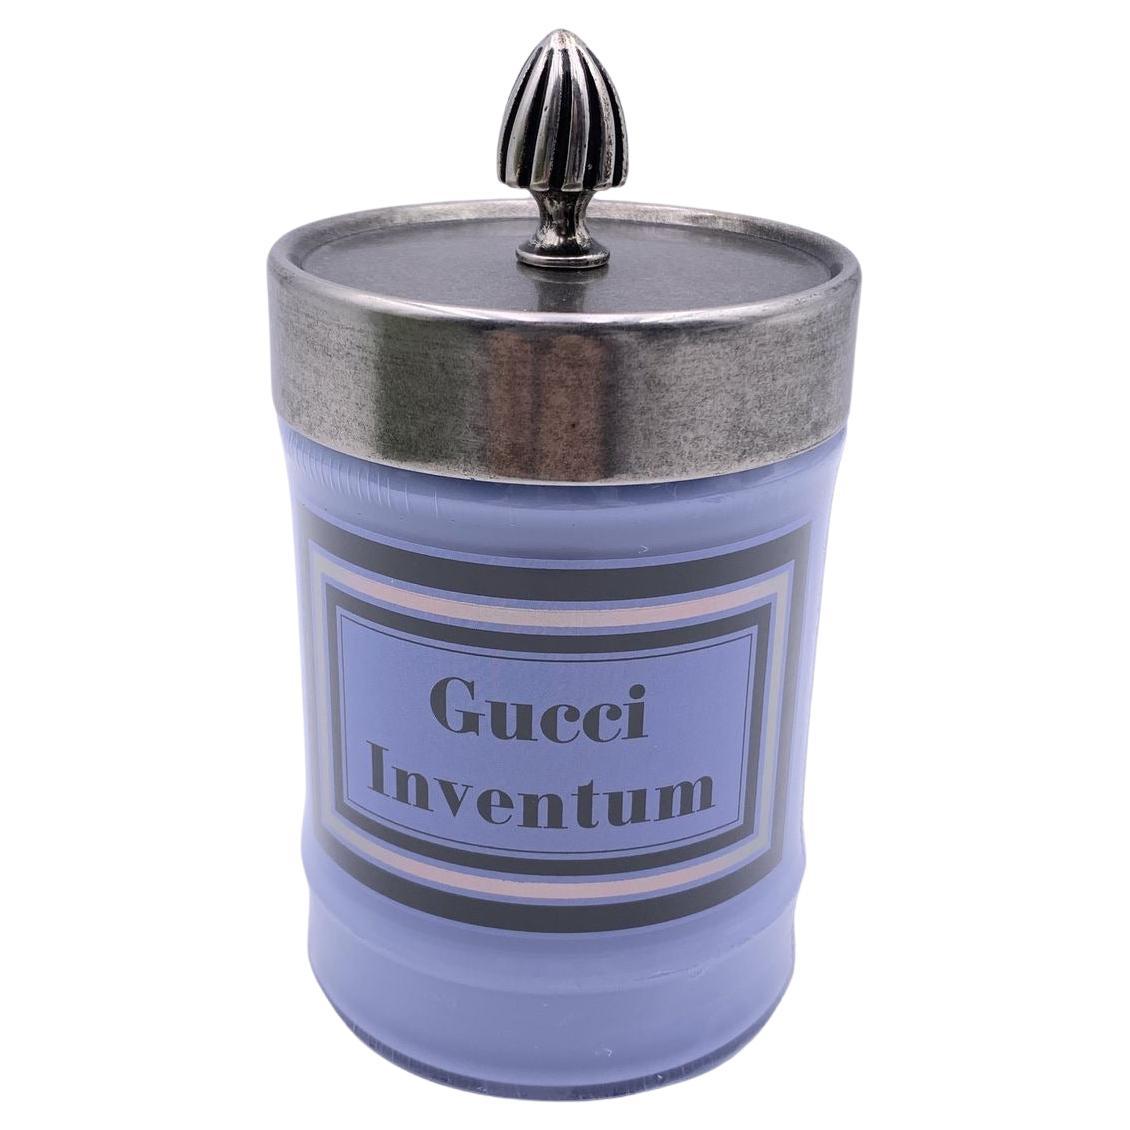 Gucci Inventum Scented Candle Light Blue Murano Glass Jar